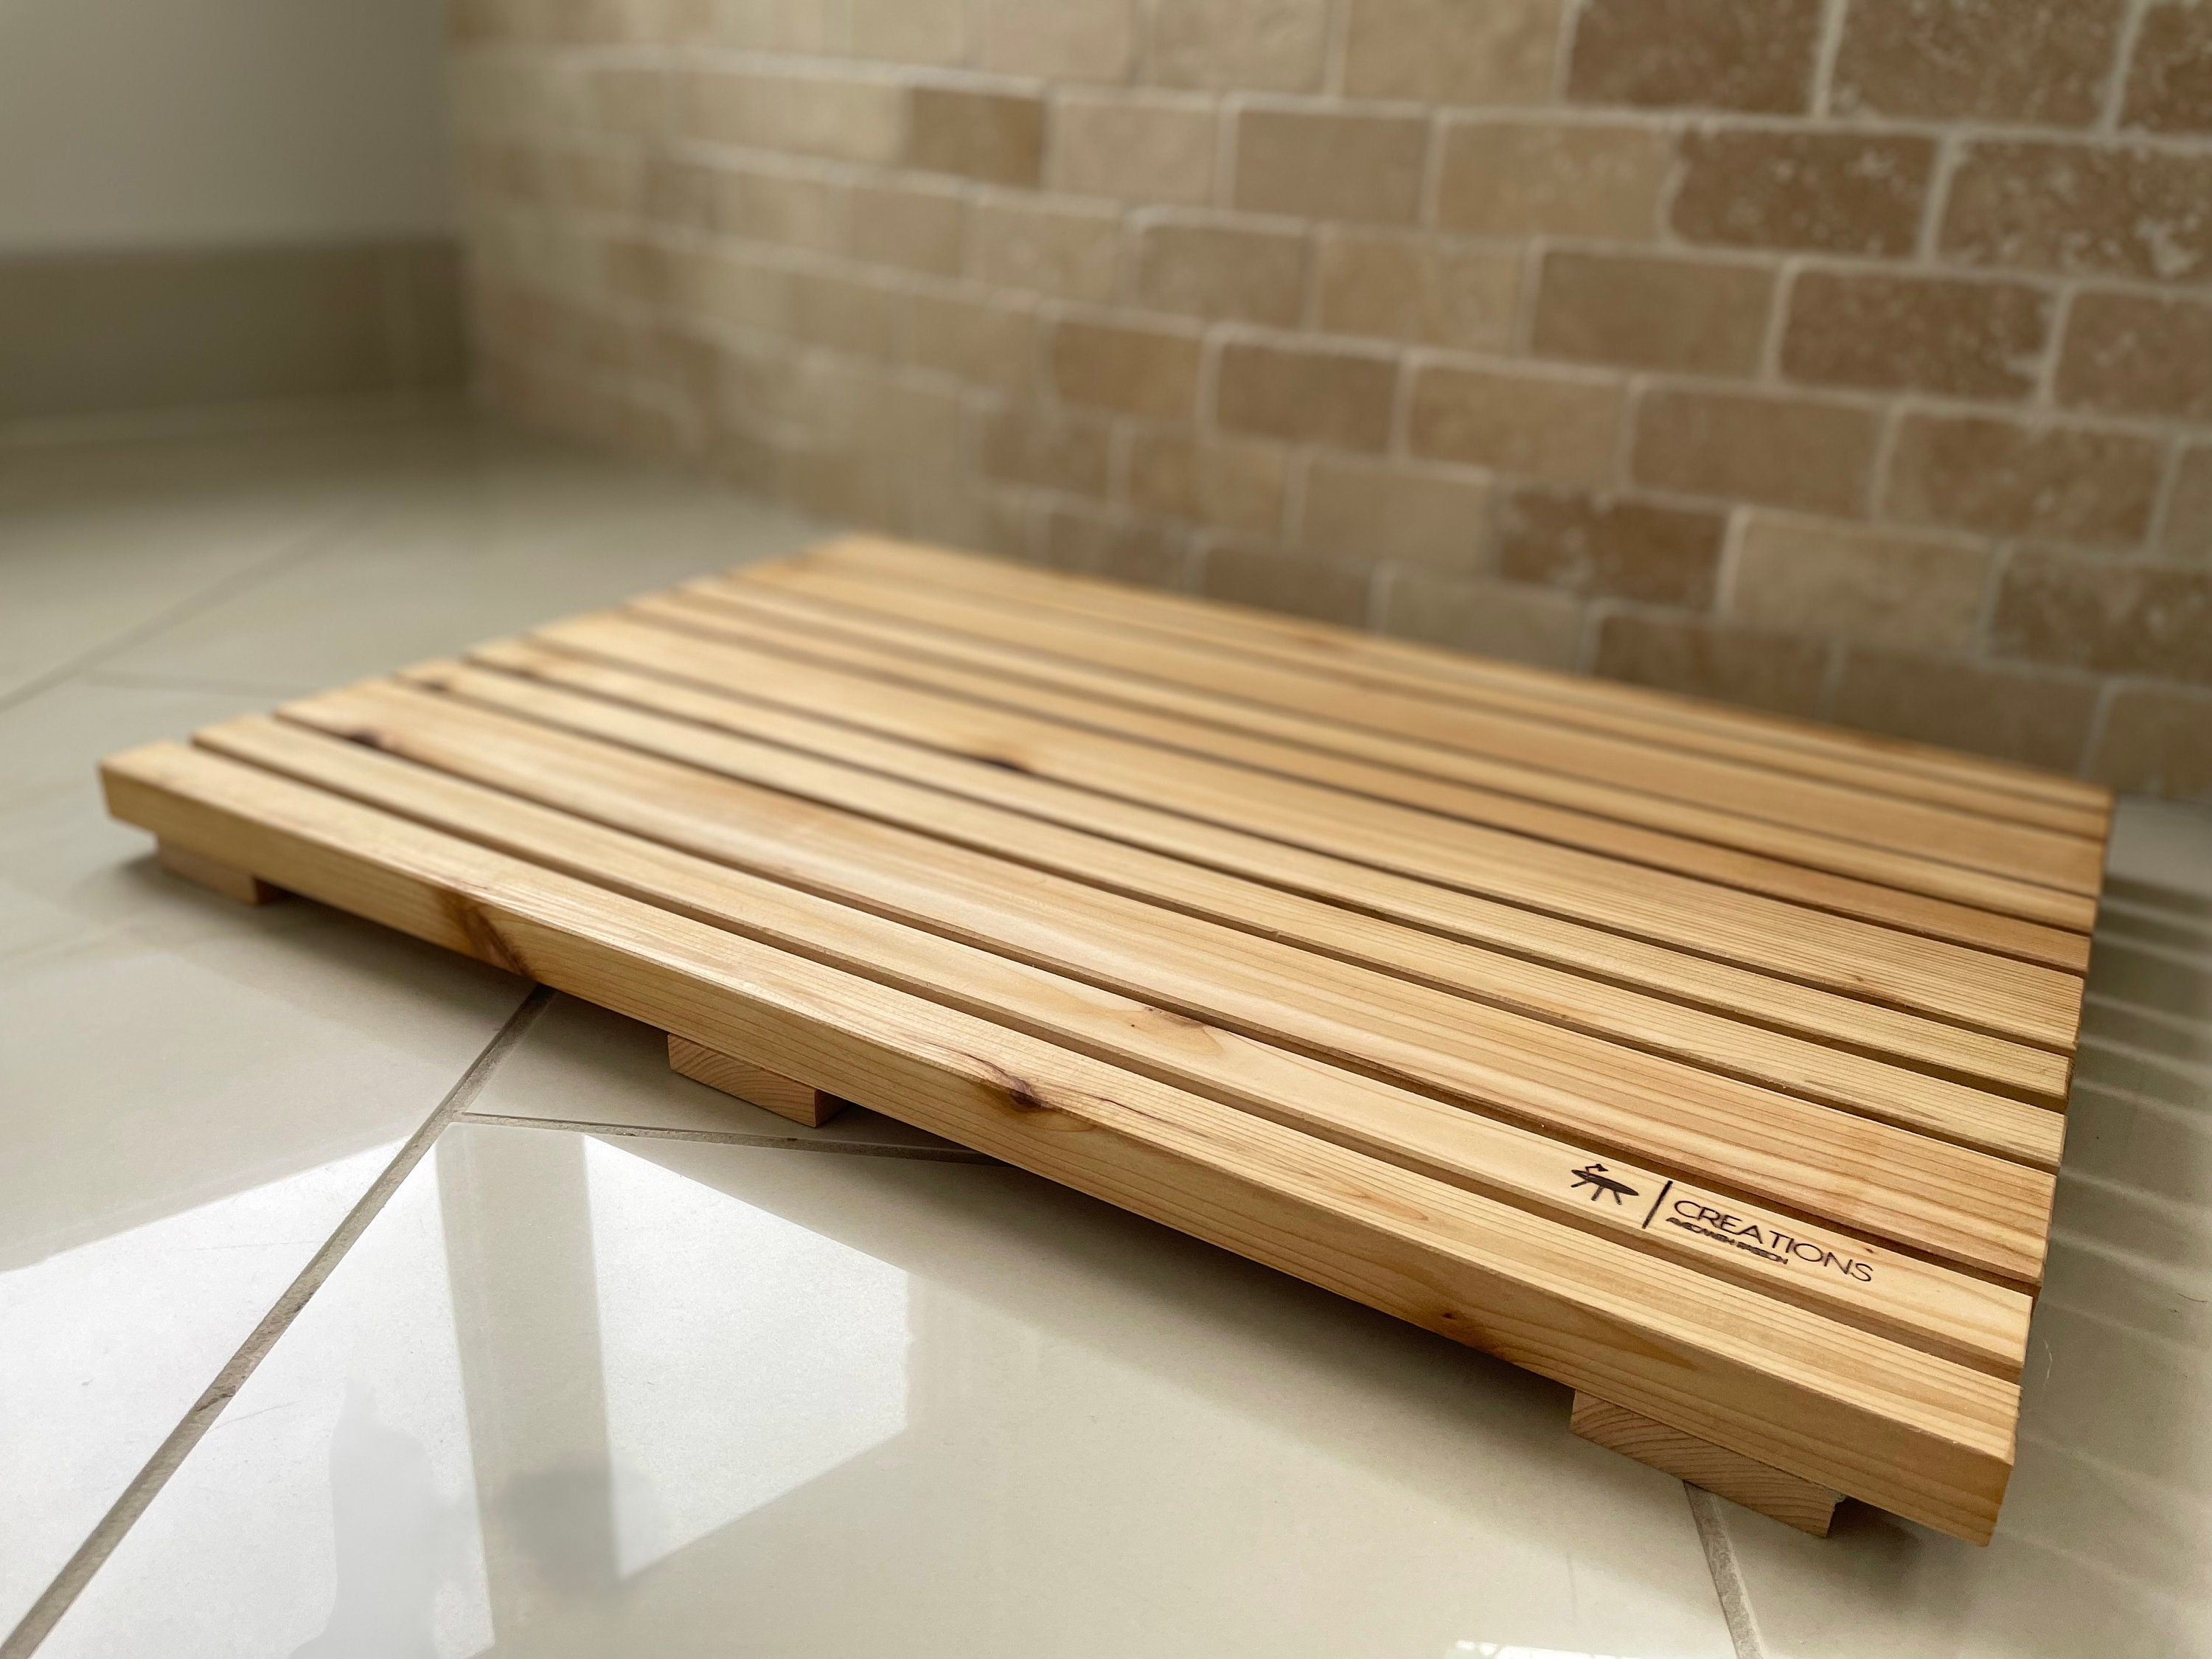 Bamboo Bath Mat Bathroom Runner Long Large Rugs Floor Wood Shower Bathtub  Waterproof Non Slip Accessories 16x48 Inch Easy to Clean,Black,1 pc